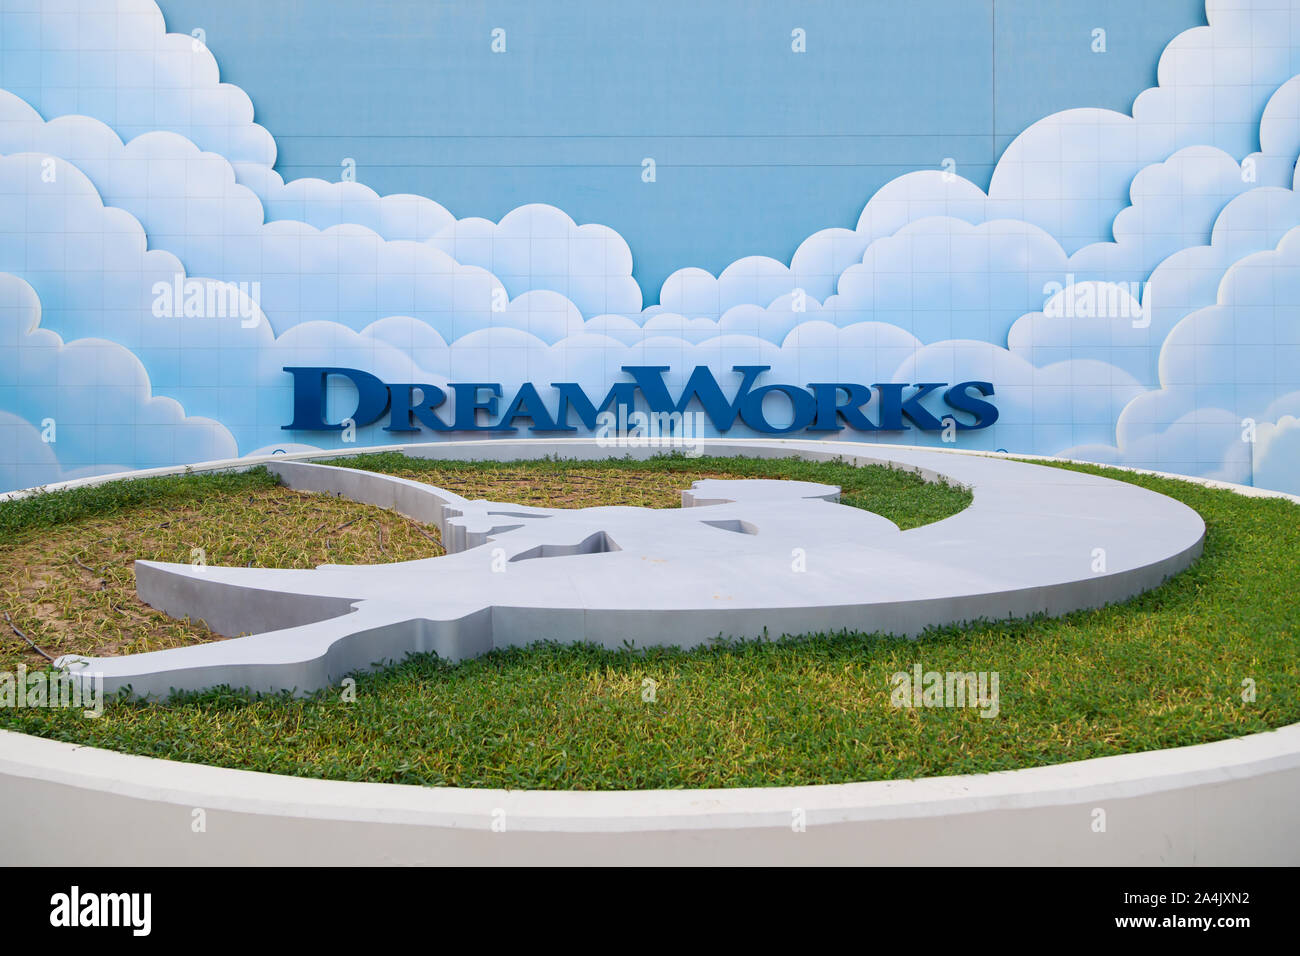 DUBAI, UAE, JANUARY 09, 2019: Dreamworks logo at the entrance to the entertainment pavilion at the Motiongate theme park in Dubai Stock Photo